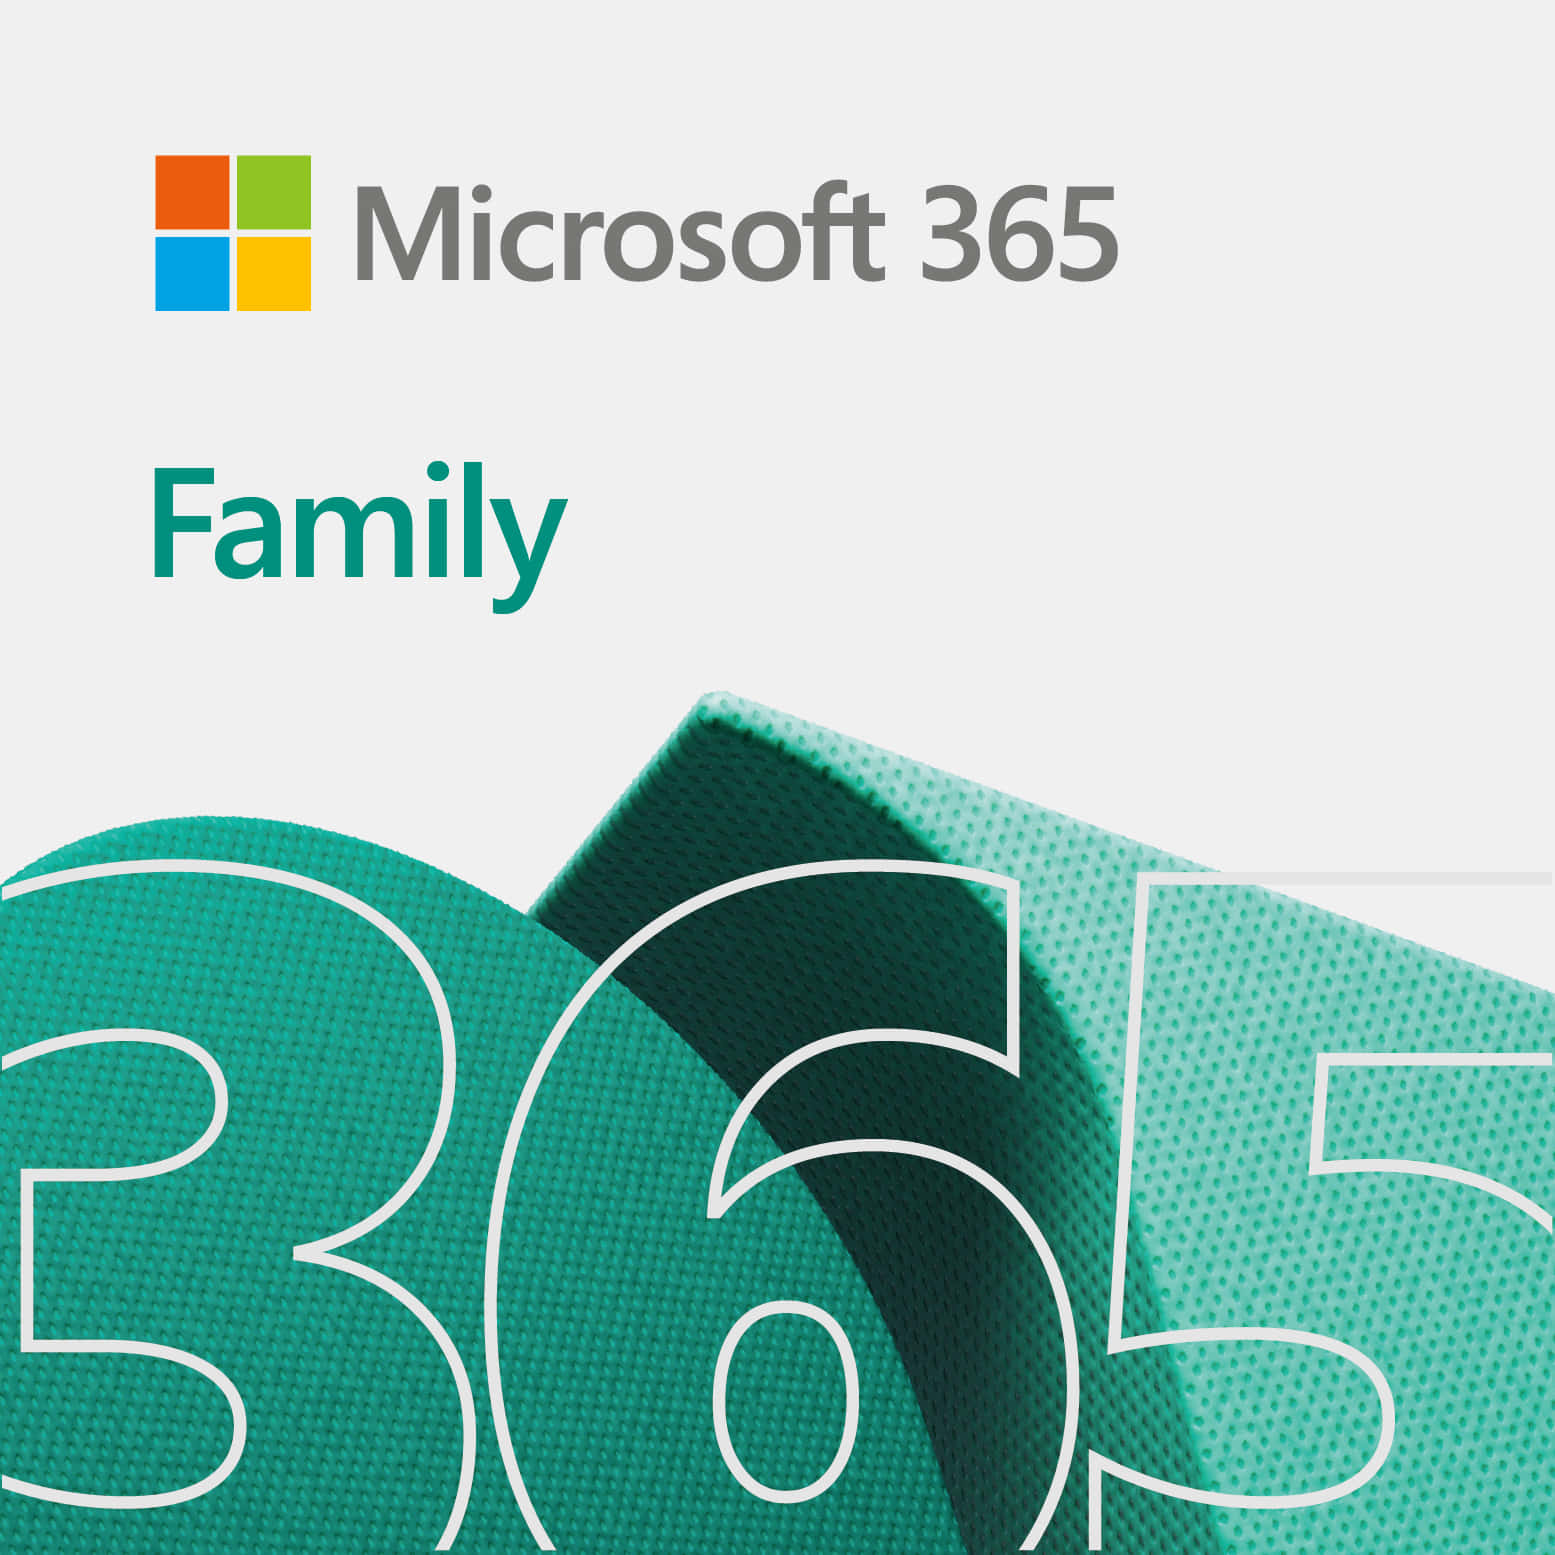 Fejrer 30 år med Microsoft innovationer